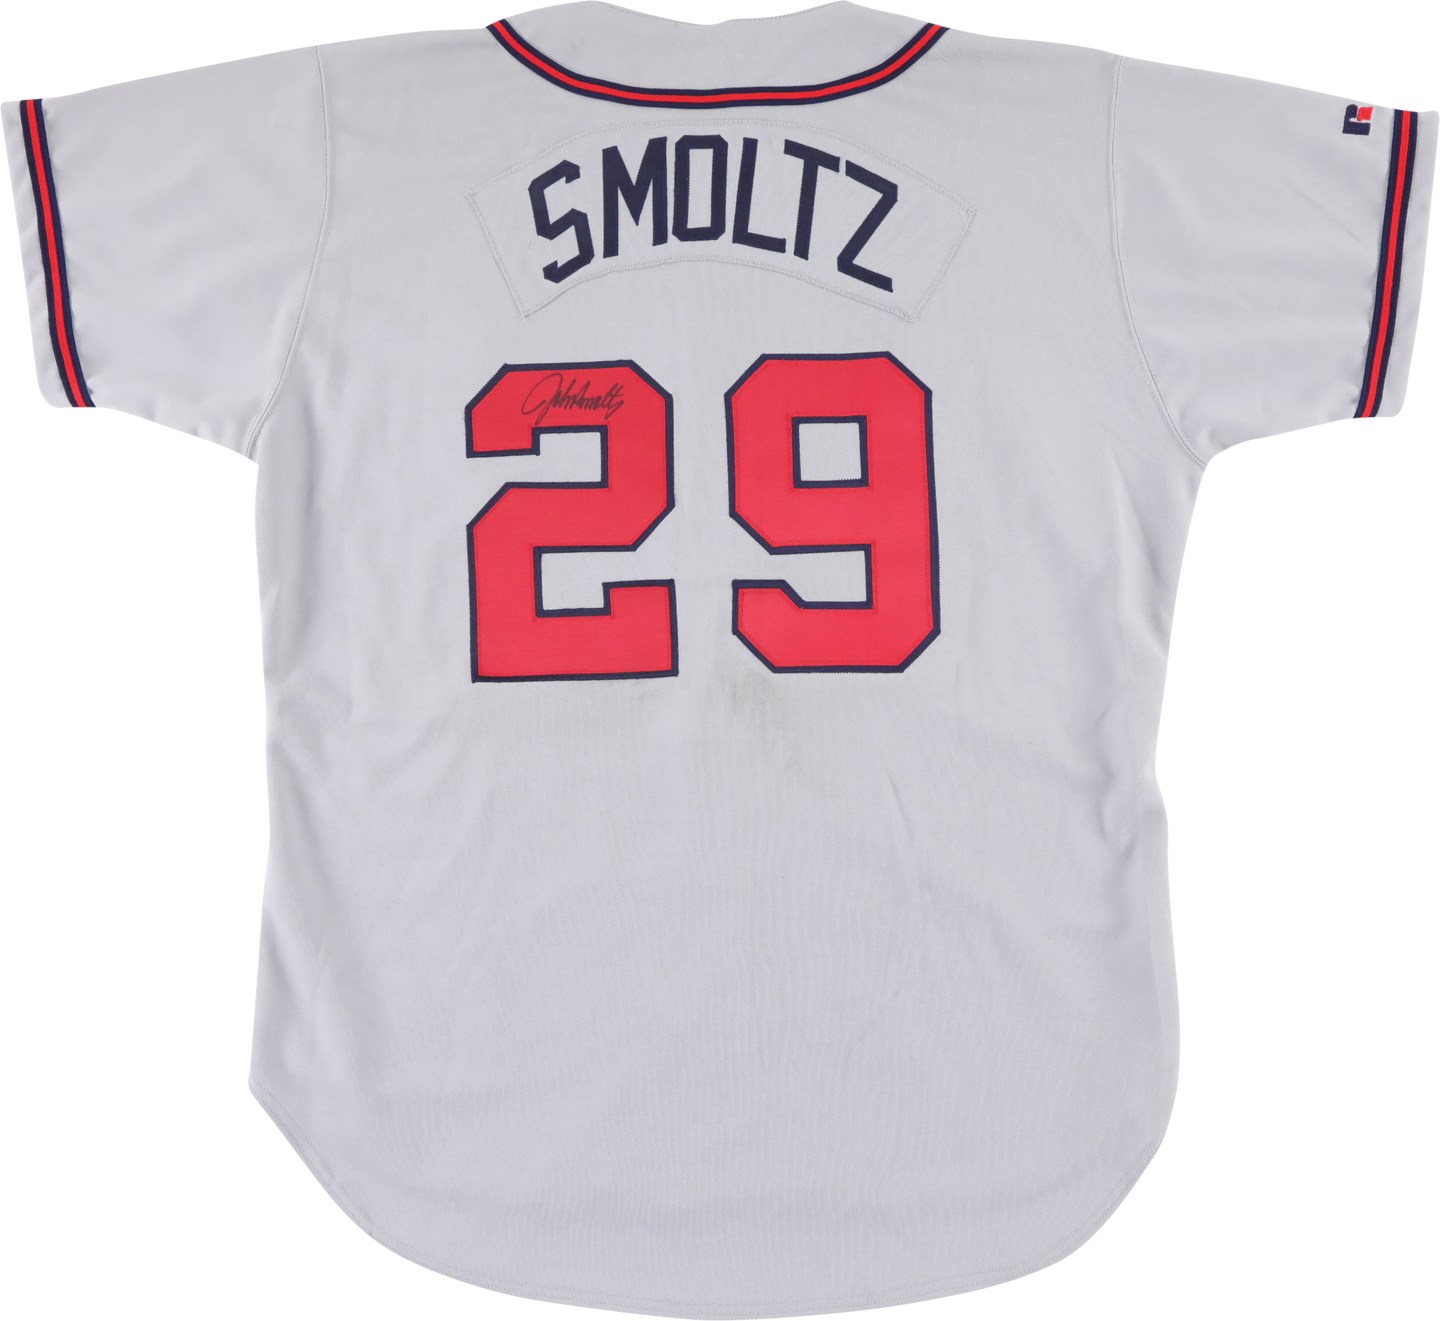 Baseball Equipment - Mid-1990s John Smoltz Atlanta Braves Signed Game Worn Jersey